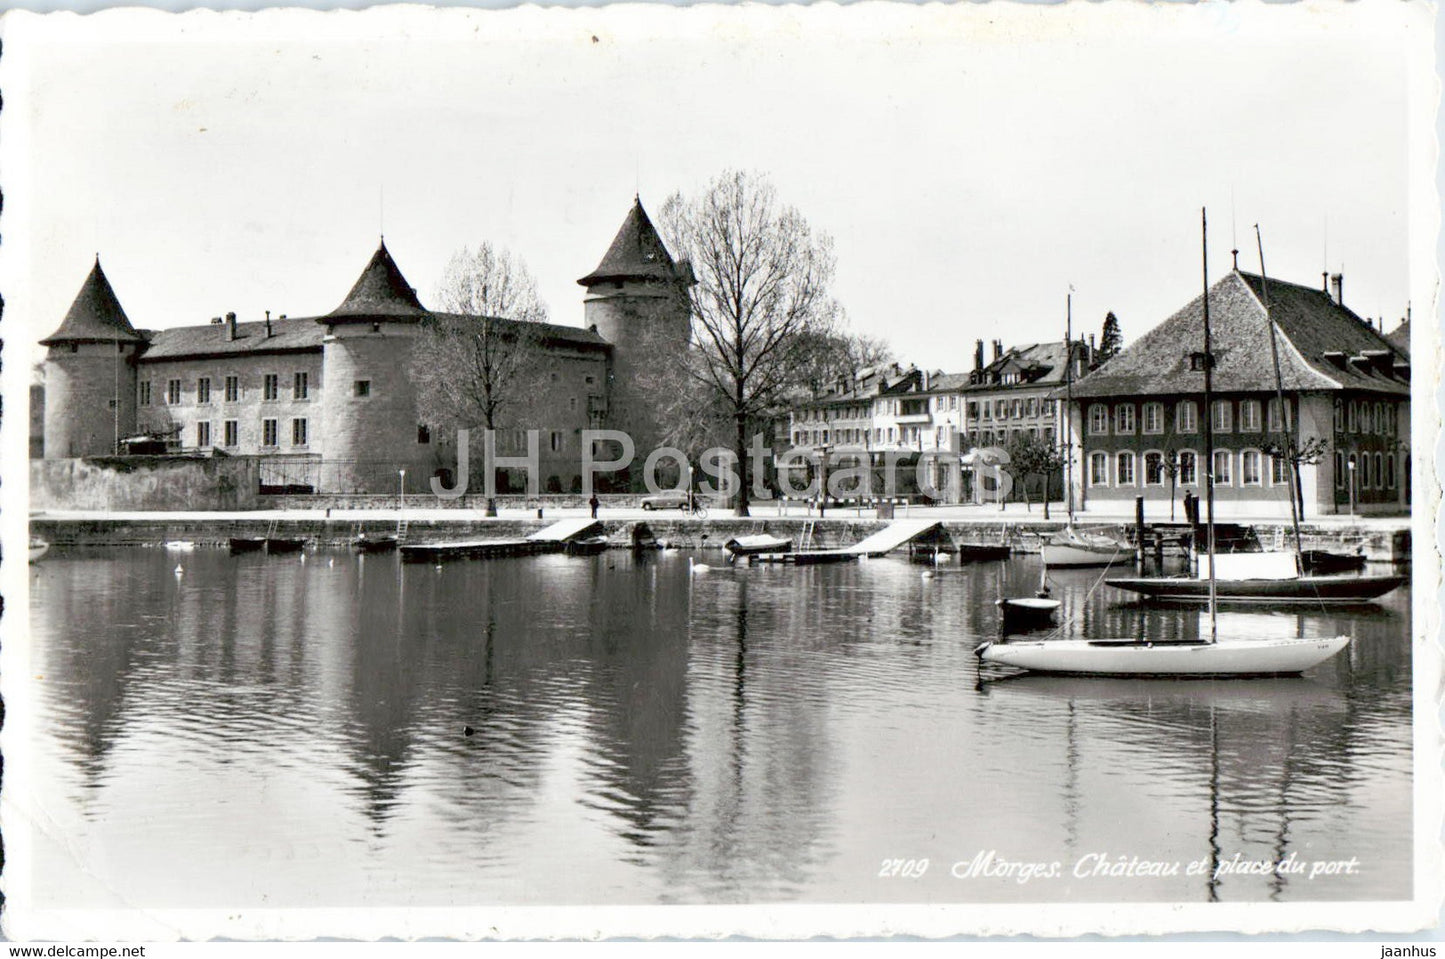 Morges - Chateau et place du port - castle - port - sailing boat - 1958 - old postcard - Switzerland - used - JH Postcards